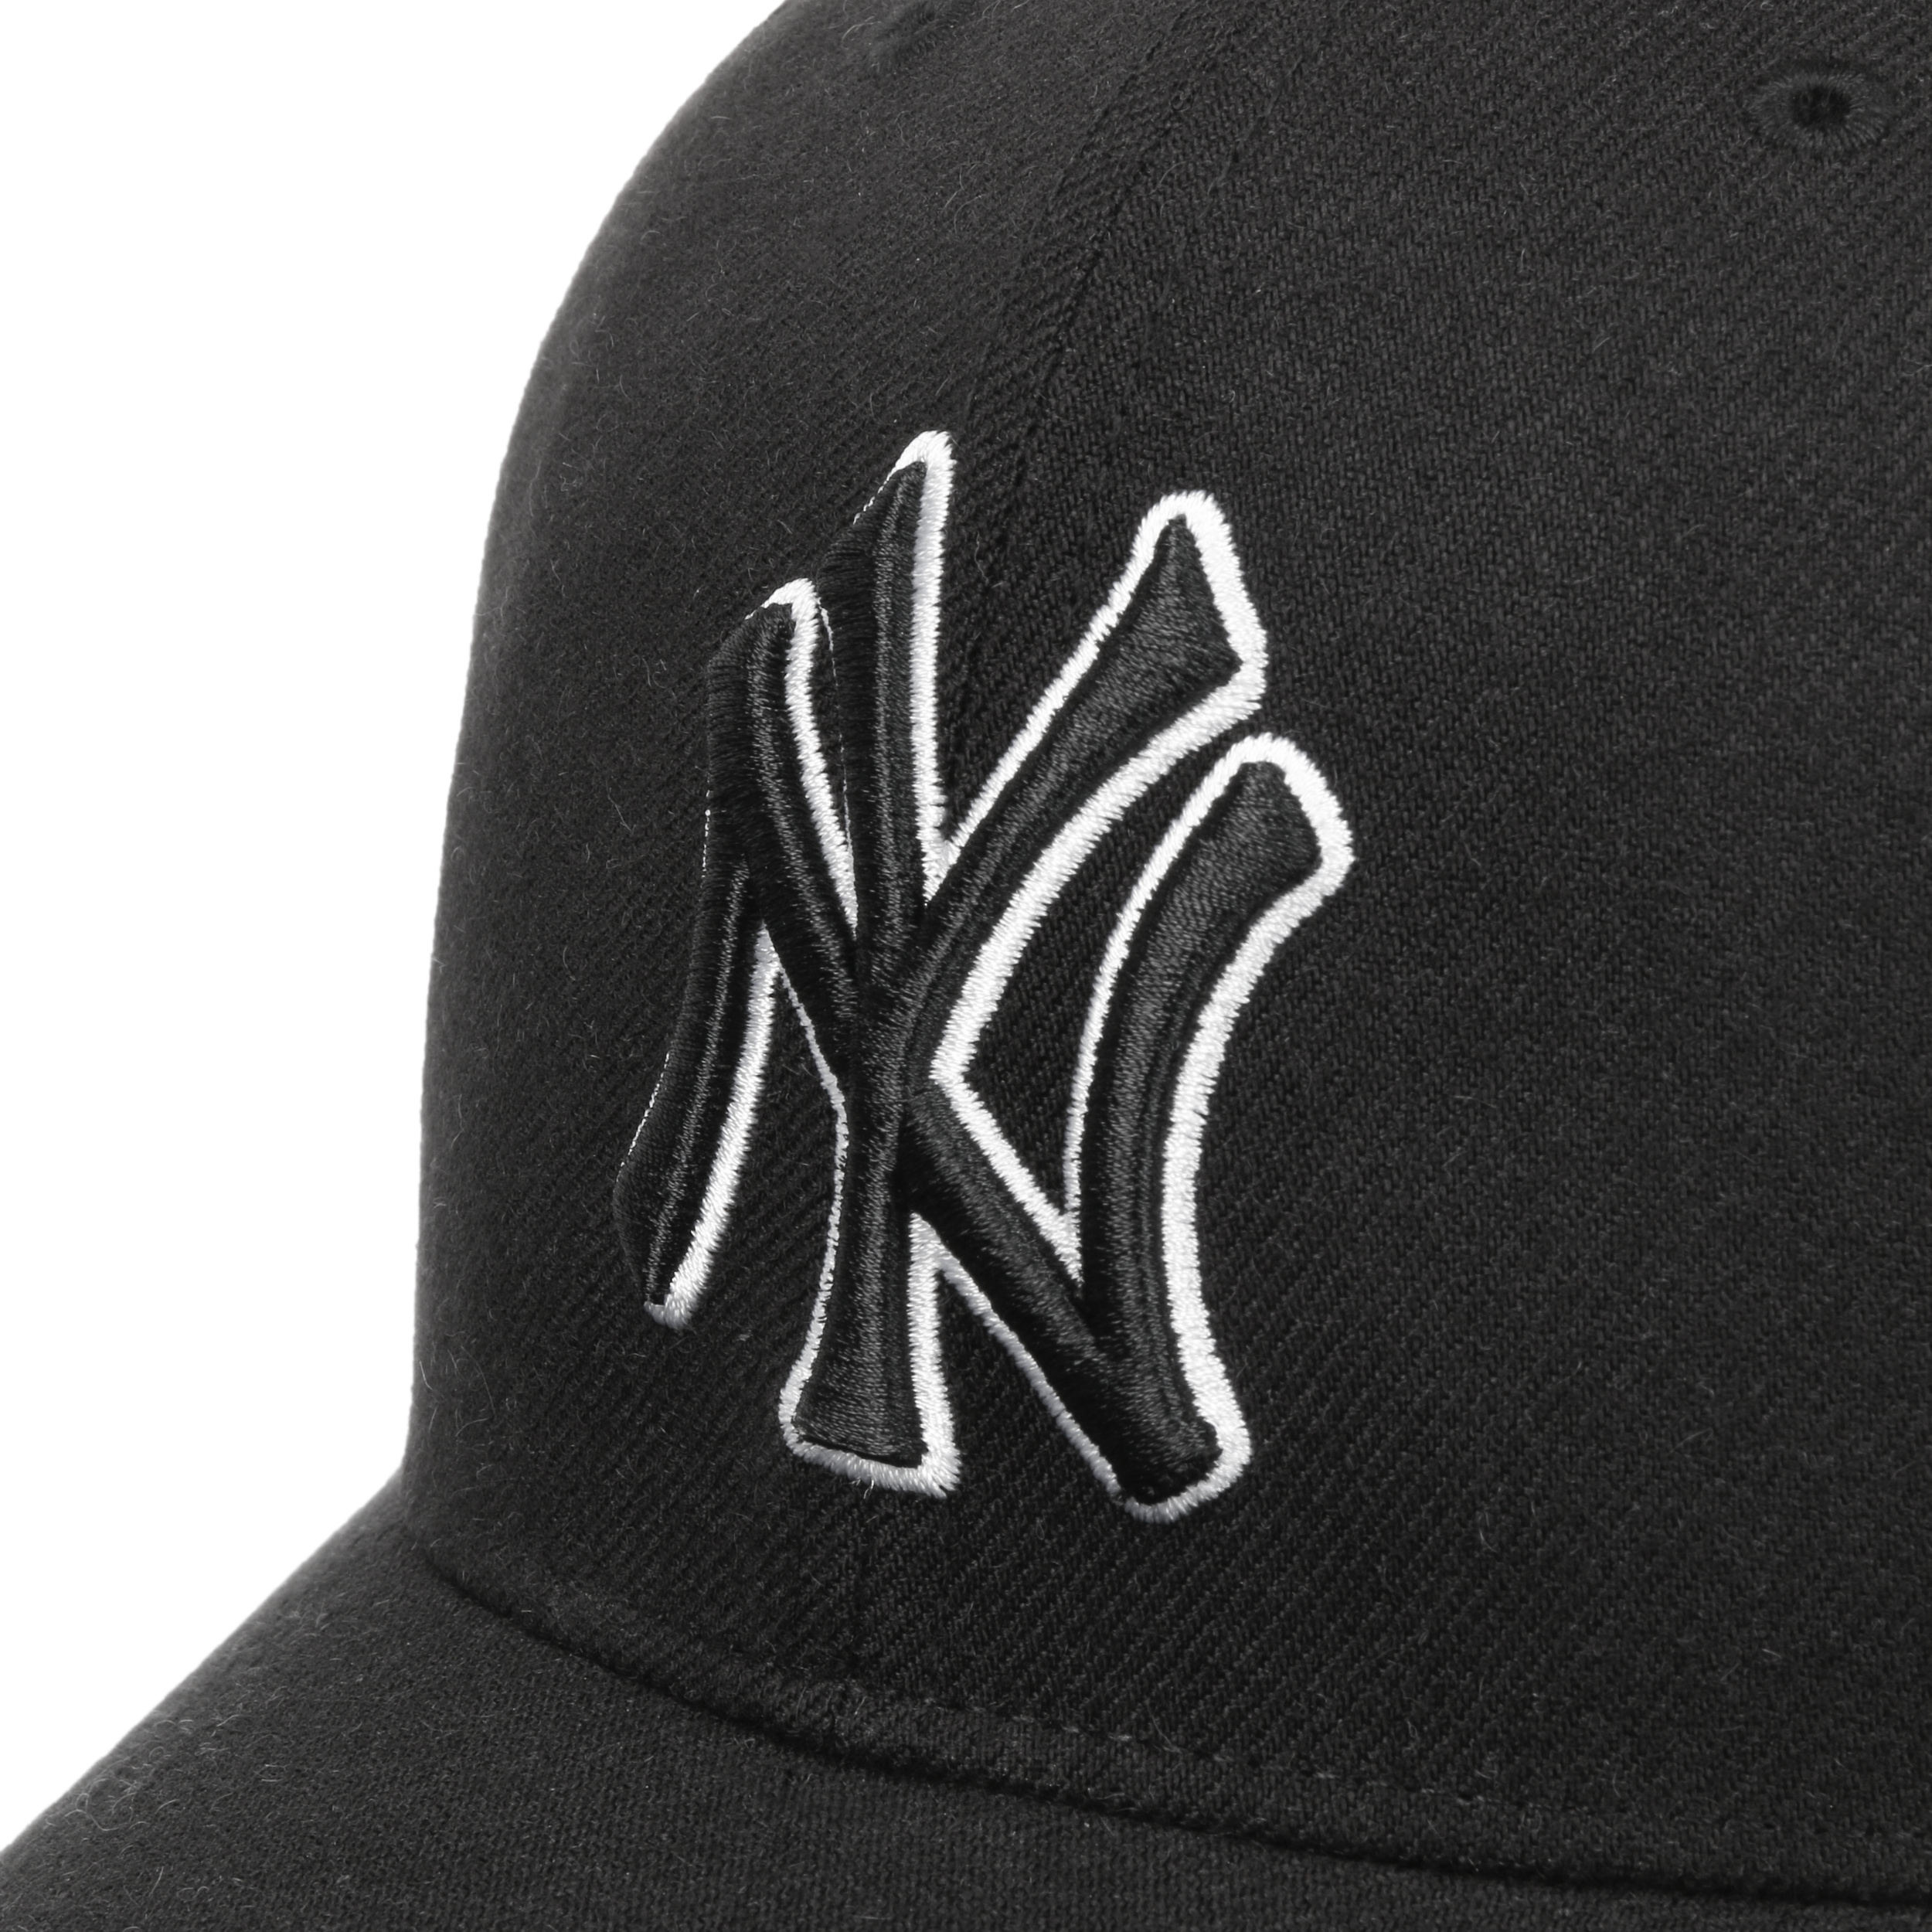 New York Yankees Cold Zone Mvp DP Black/White Adjustable - 47 Brand cap